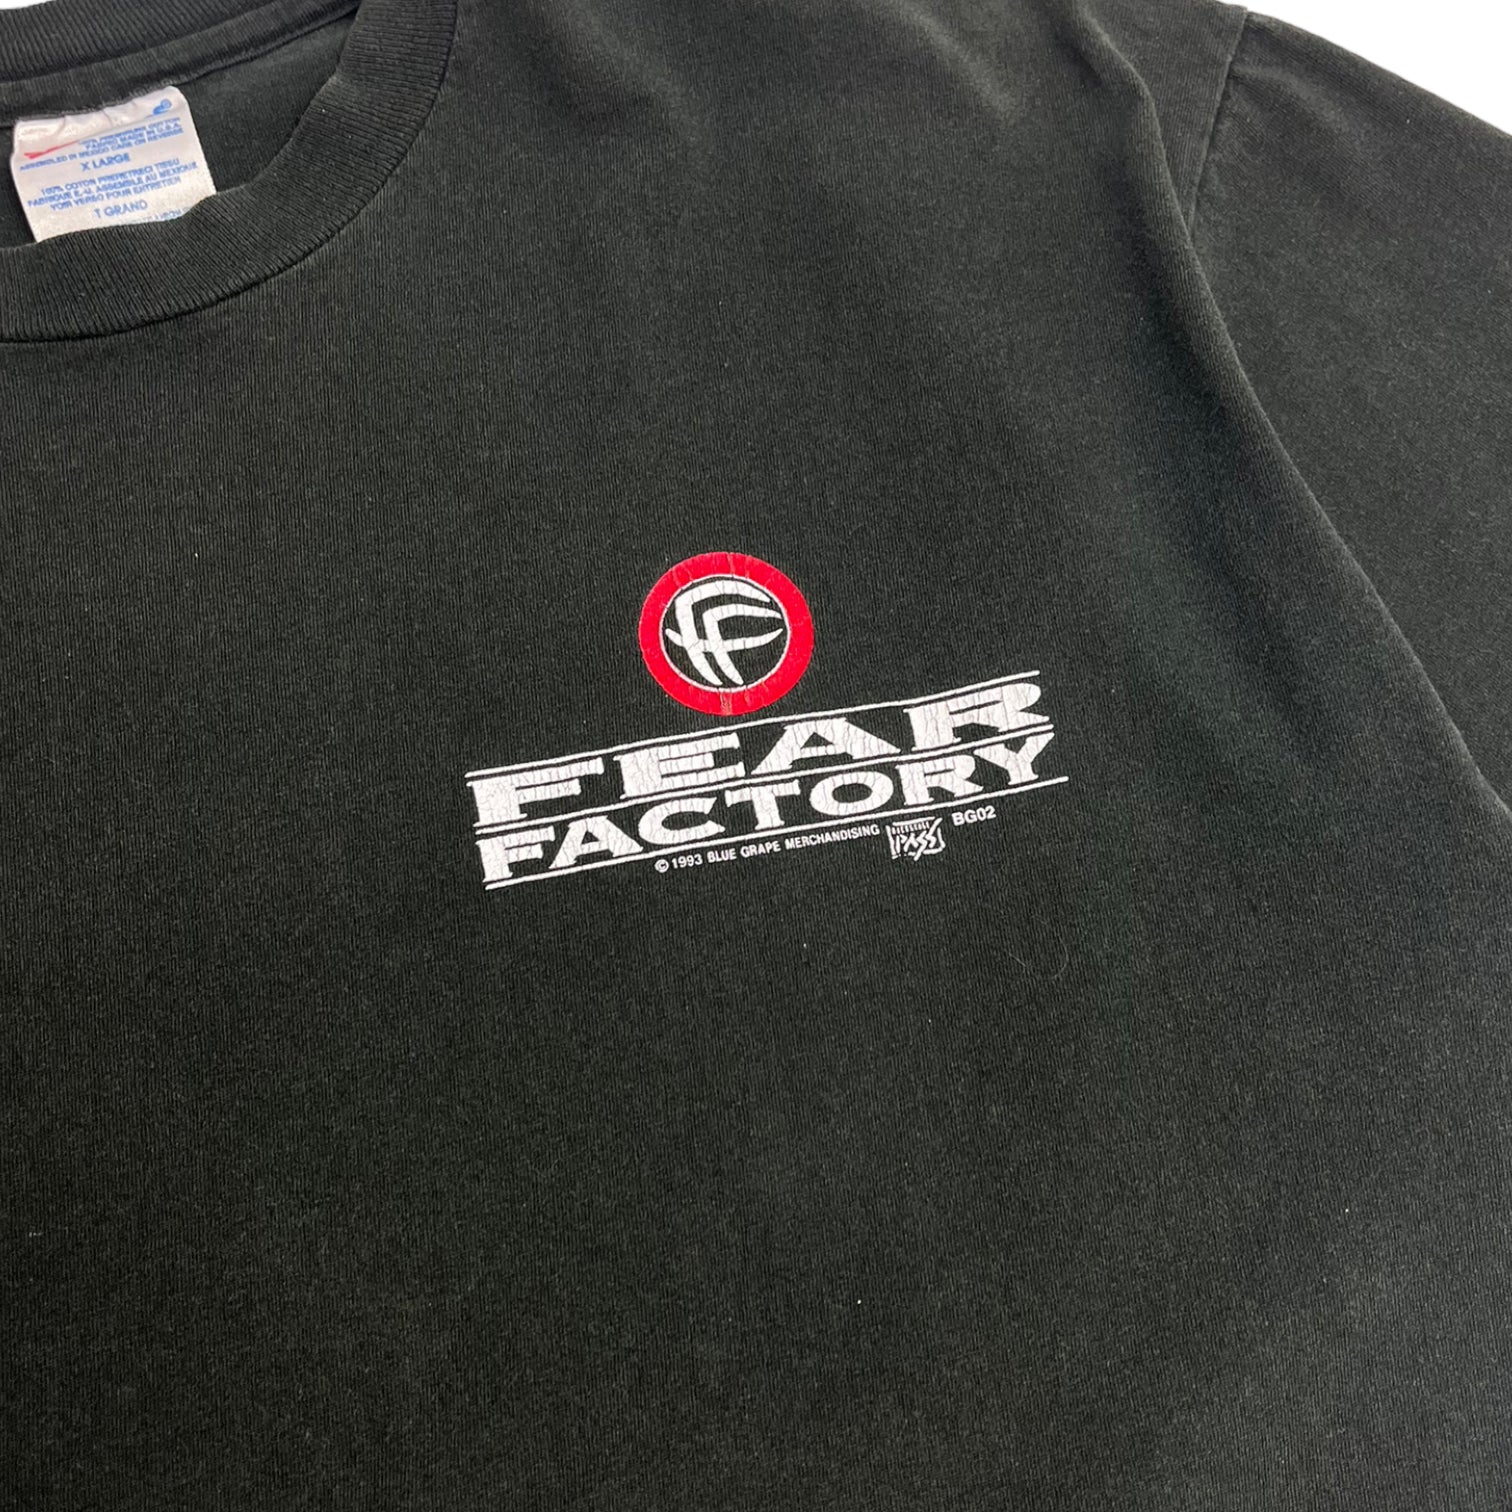 1993 Fear Factory "I Love America" Shirt